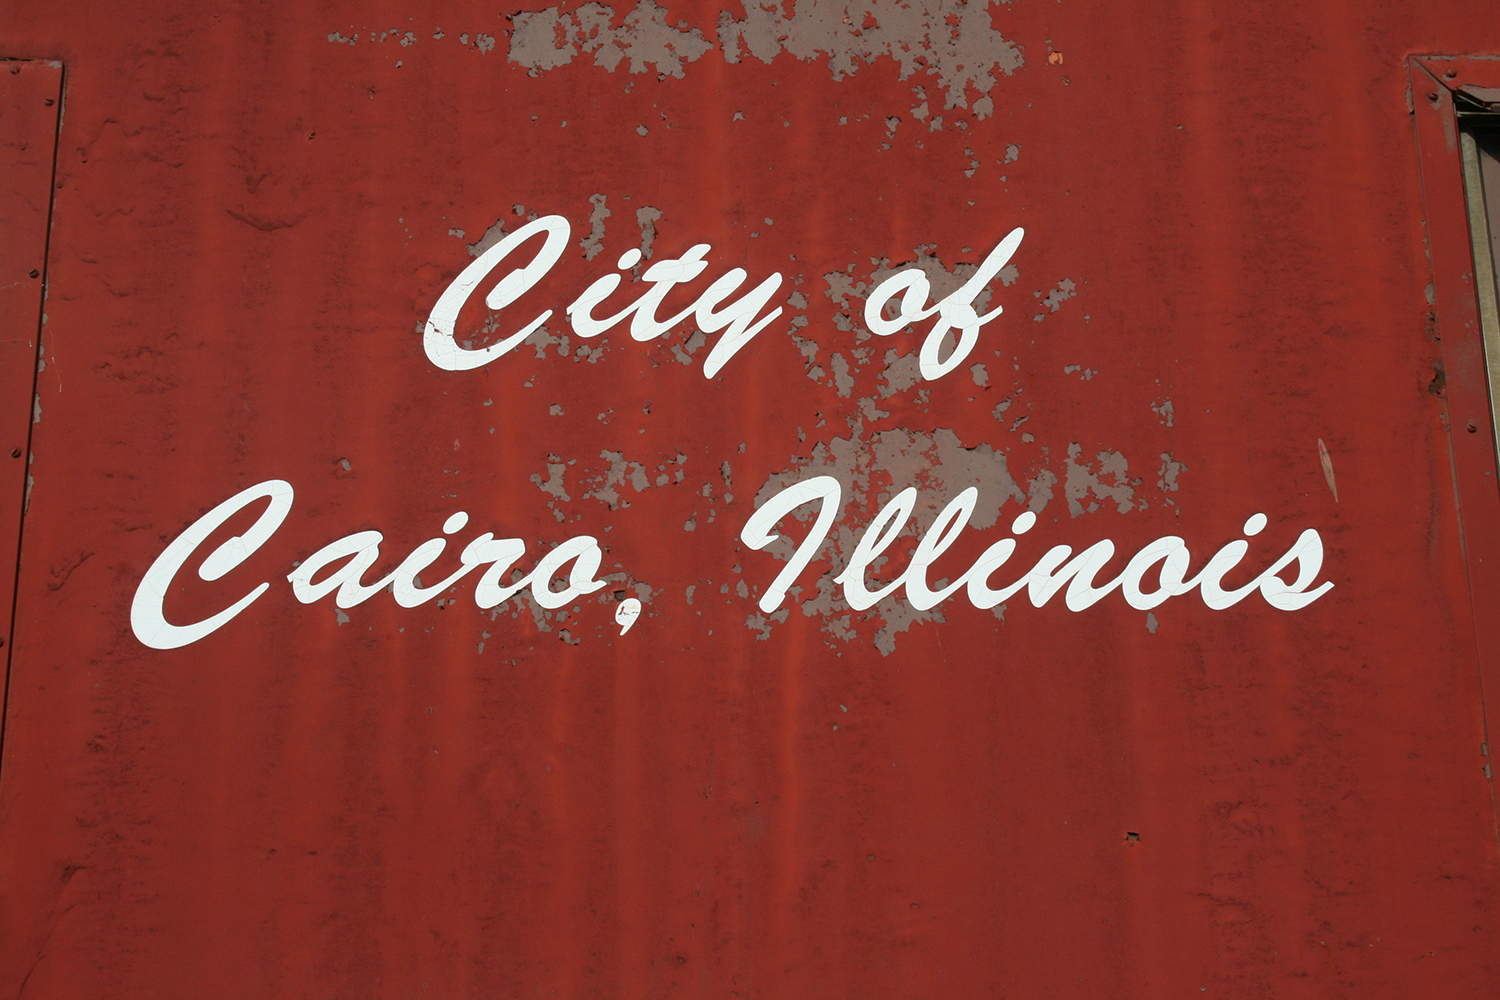 Ghost Town Cairo Illinois copyright sublunar 2011